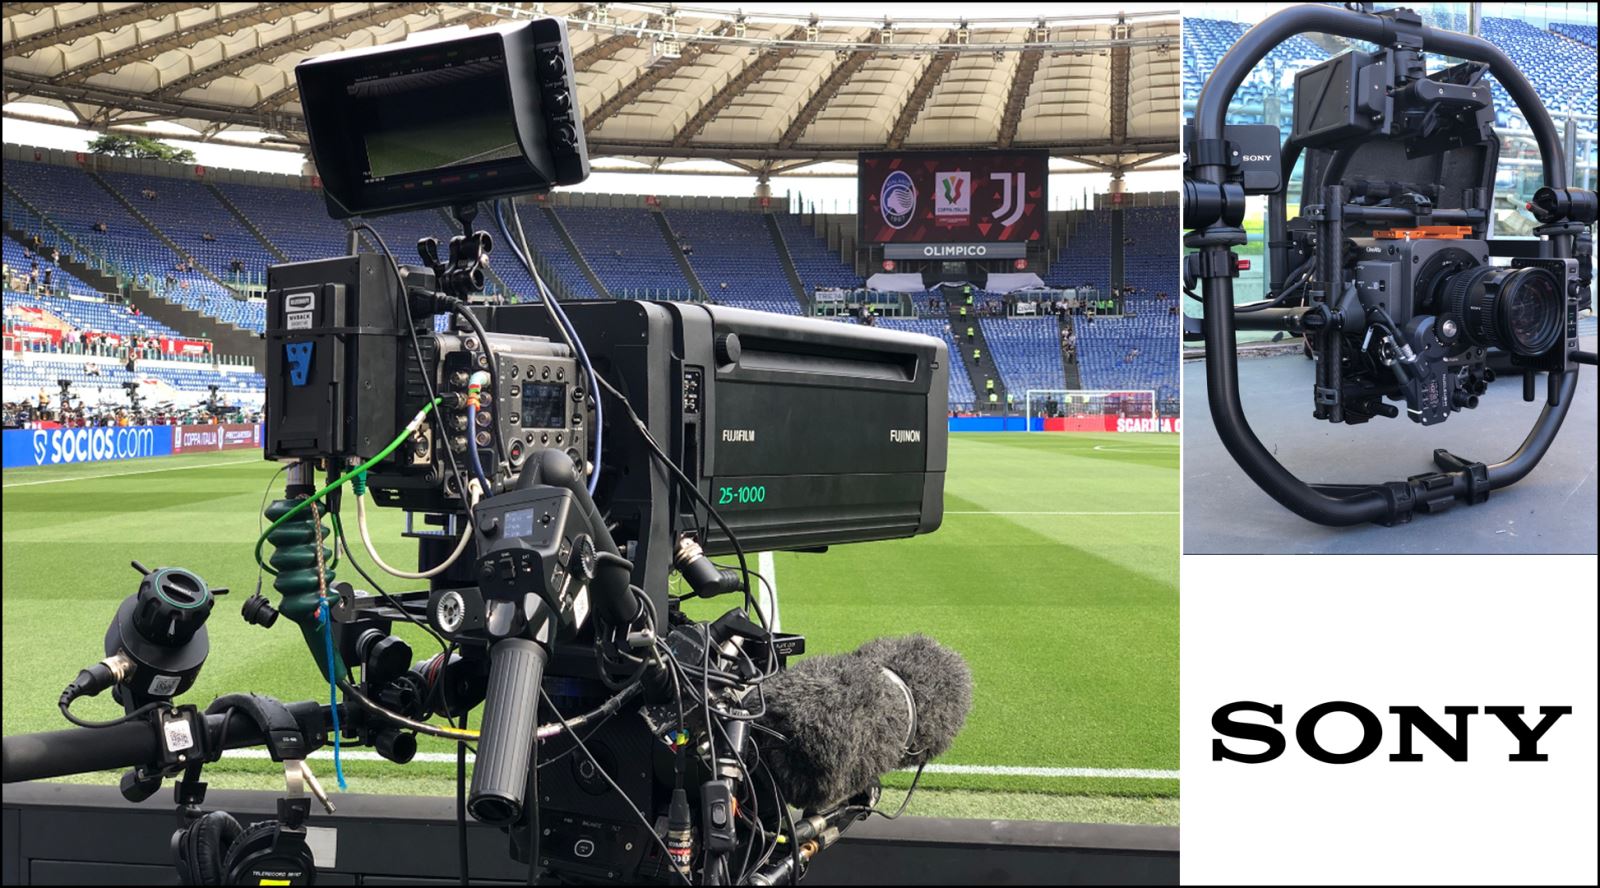 Sony cameras at the Coppa Italia Final